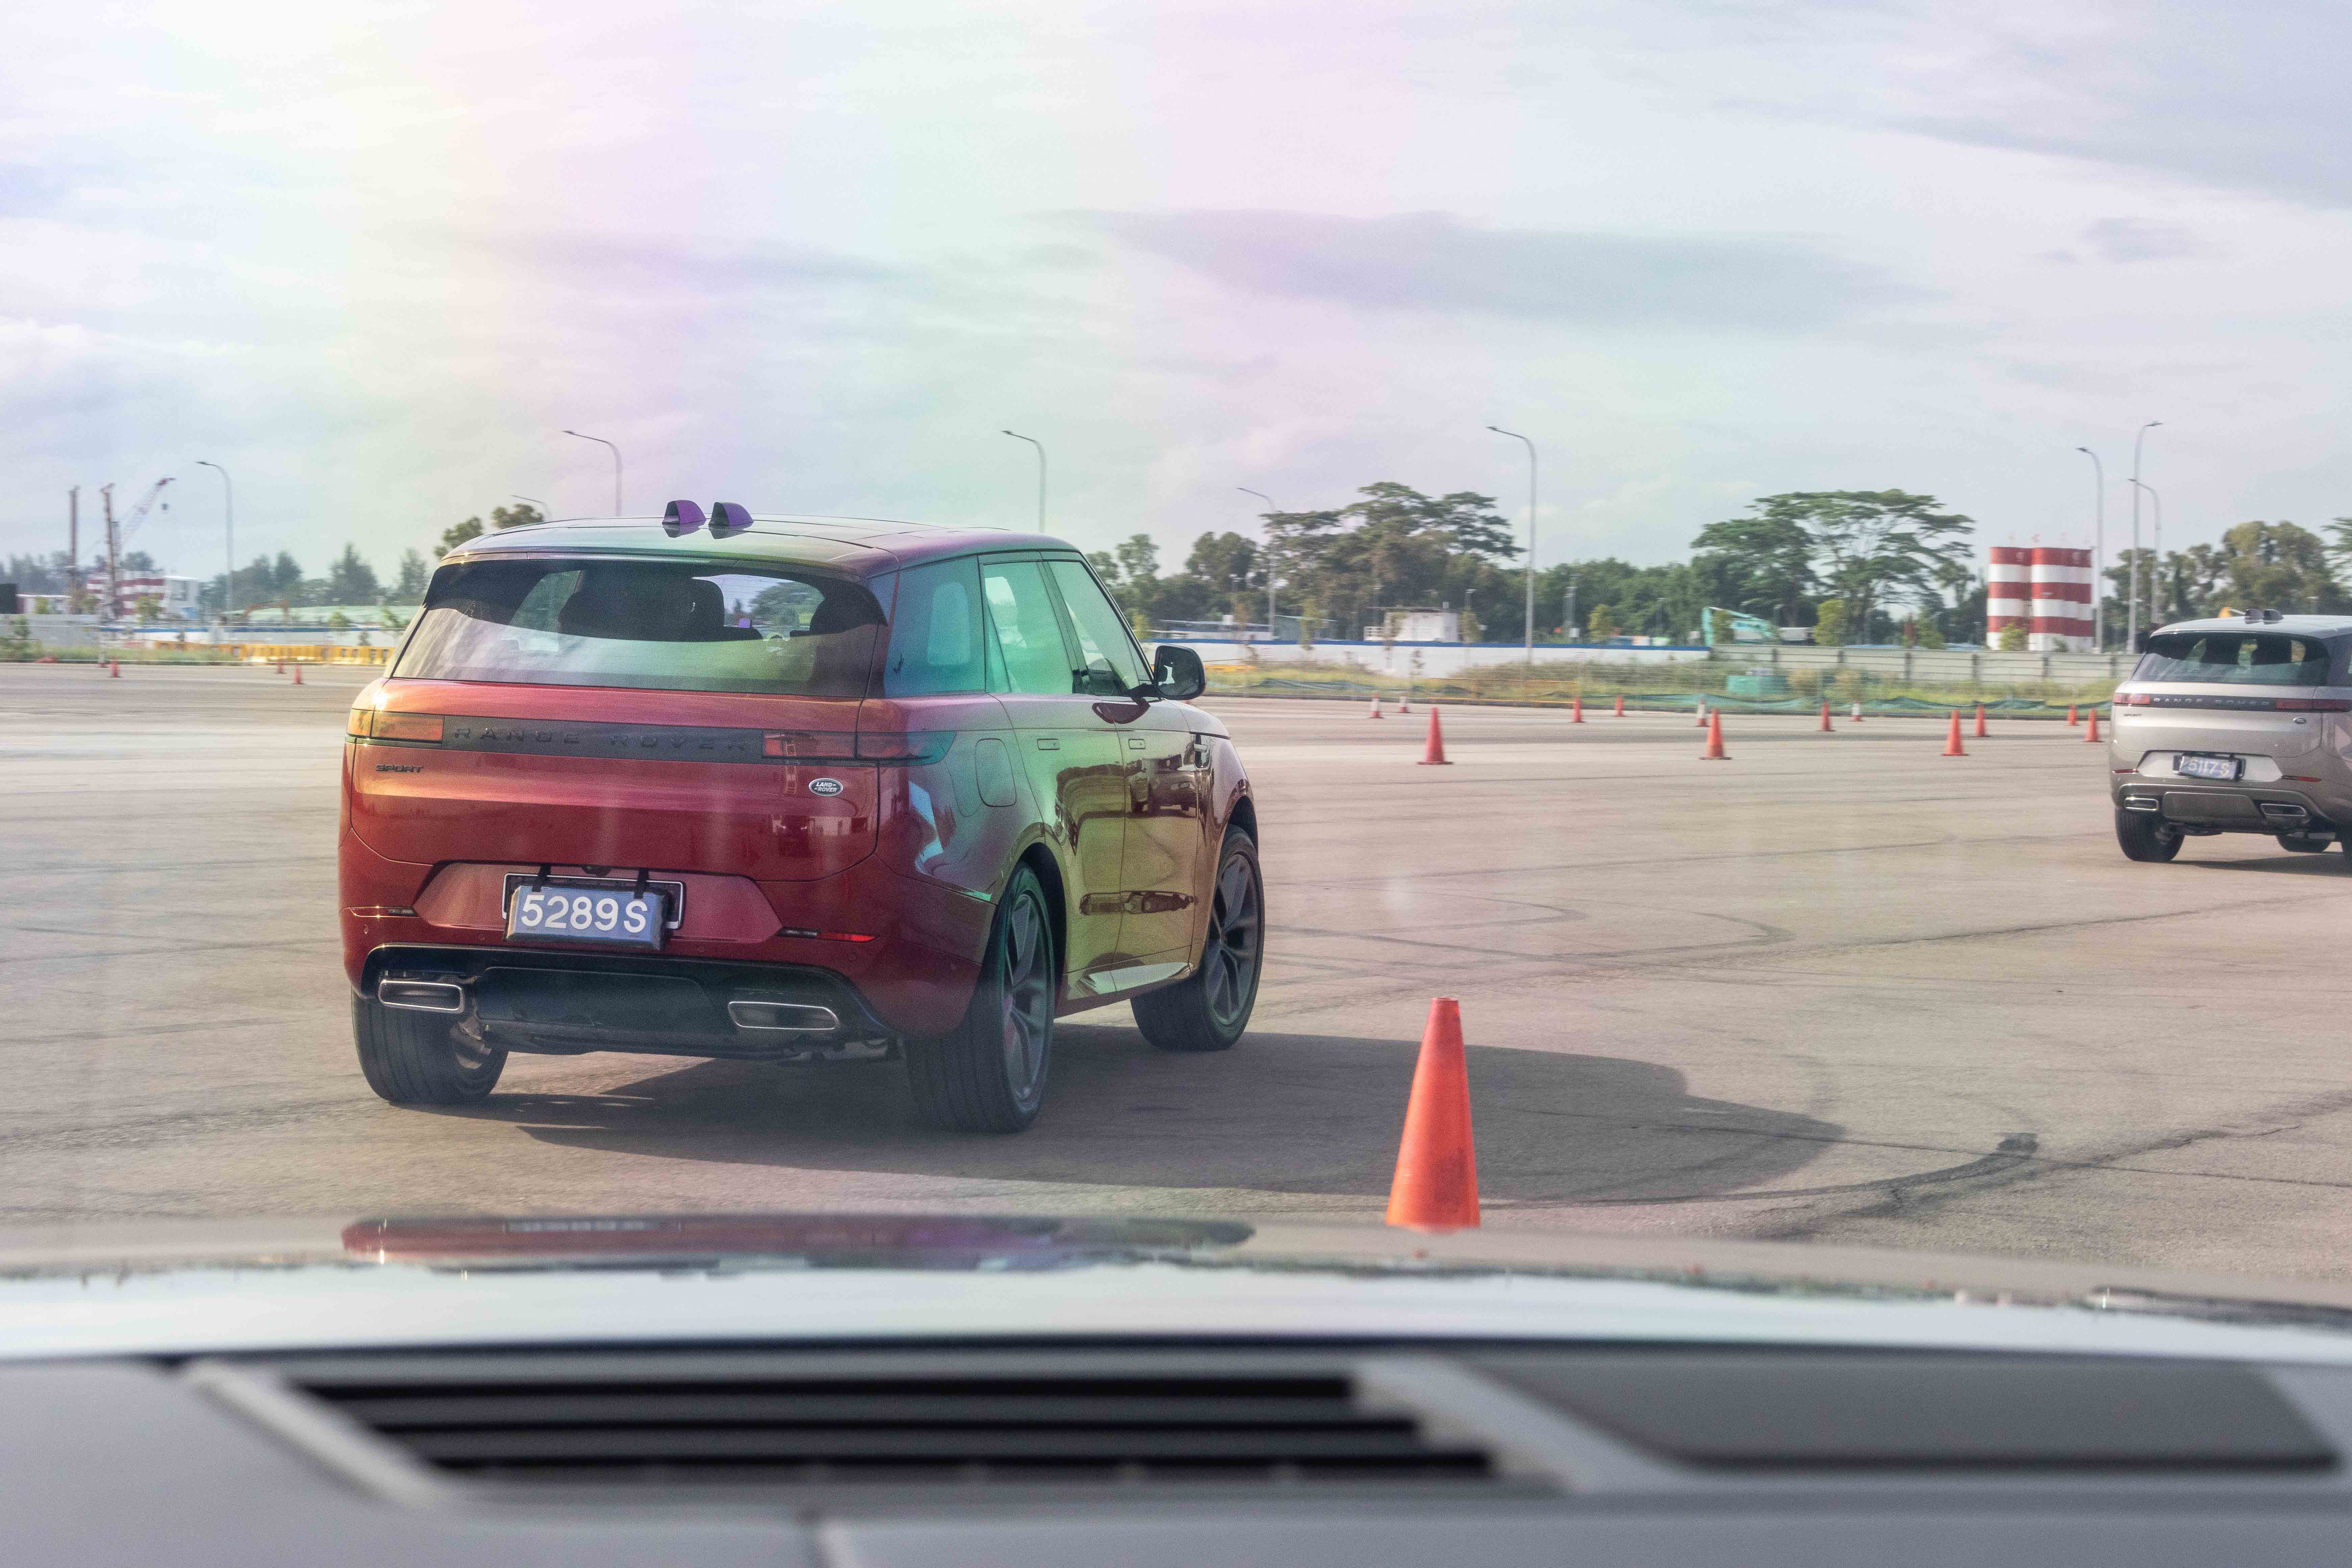 Range Rover Sport driving impressions Singapore